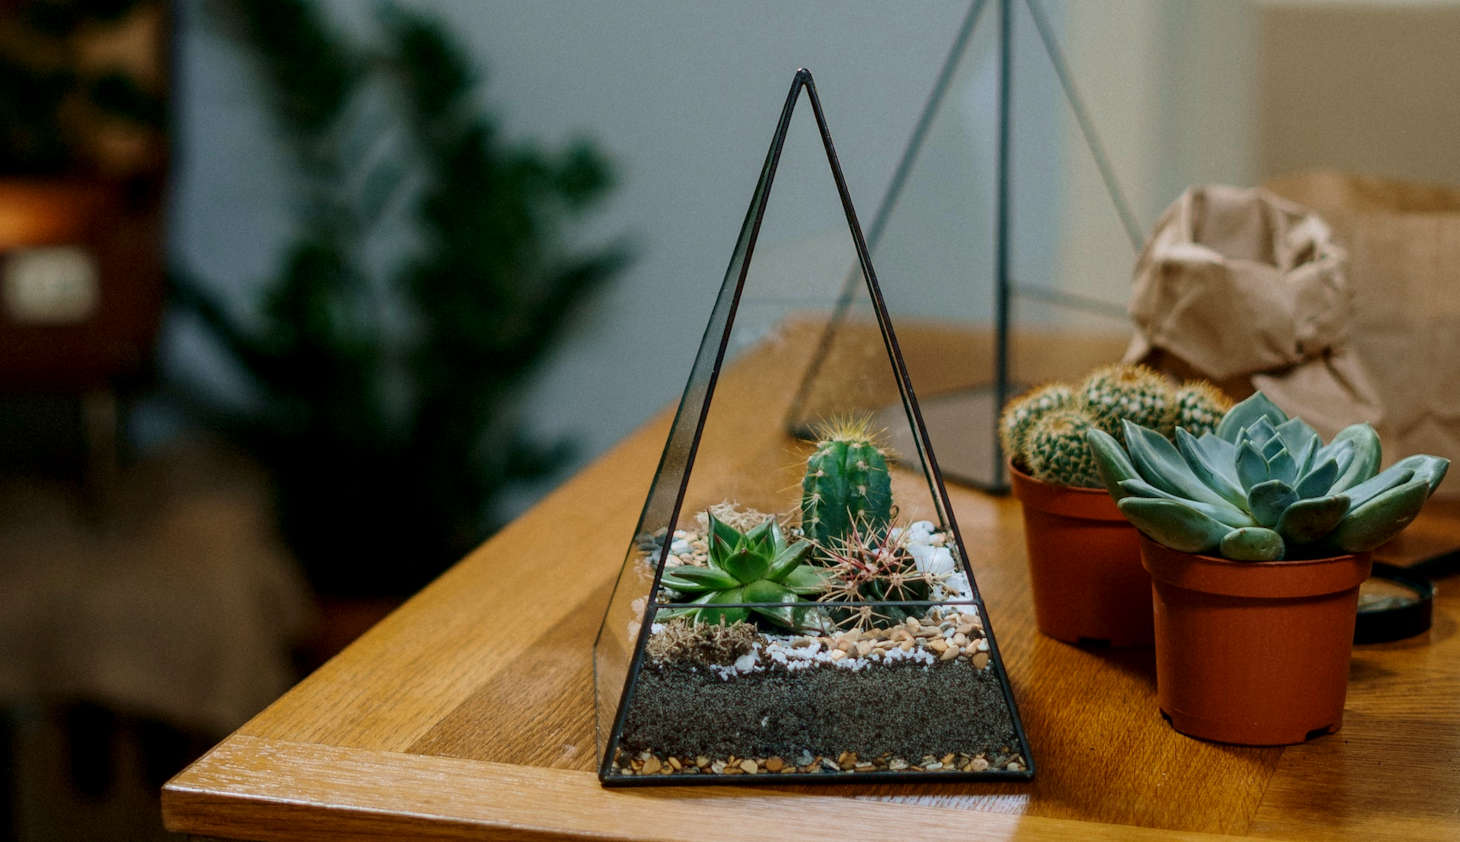 cactus in a pyramid shaped terrarium